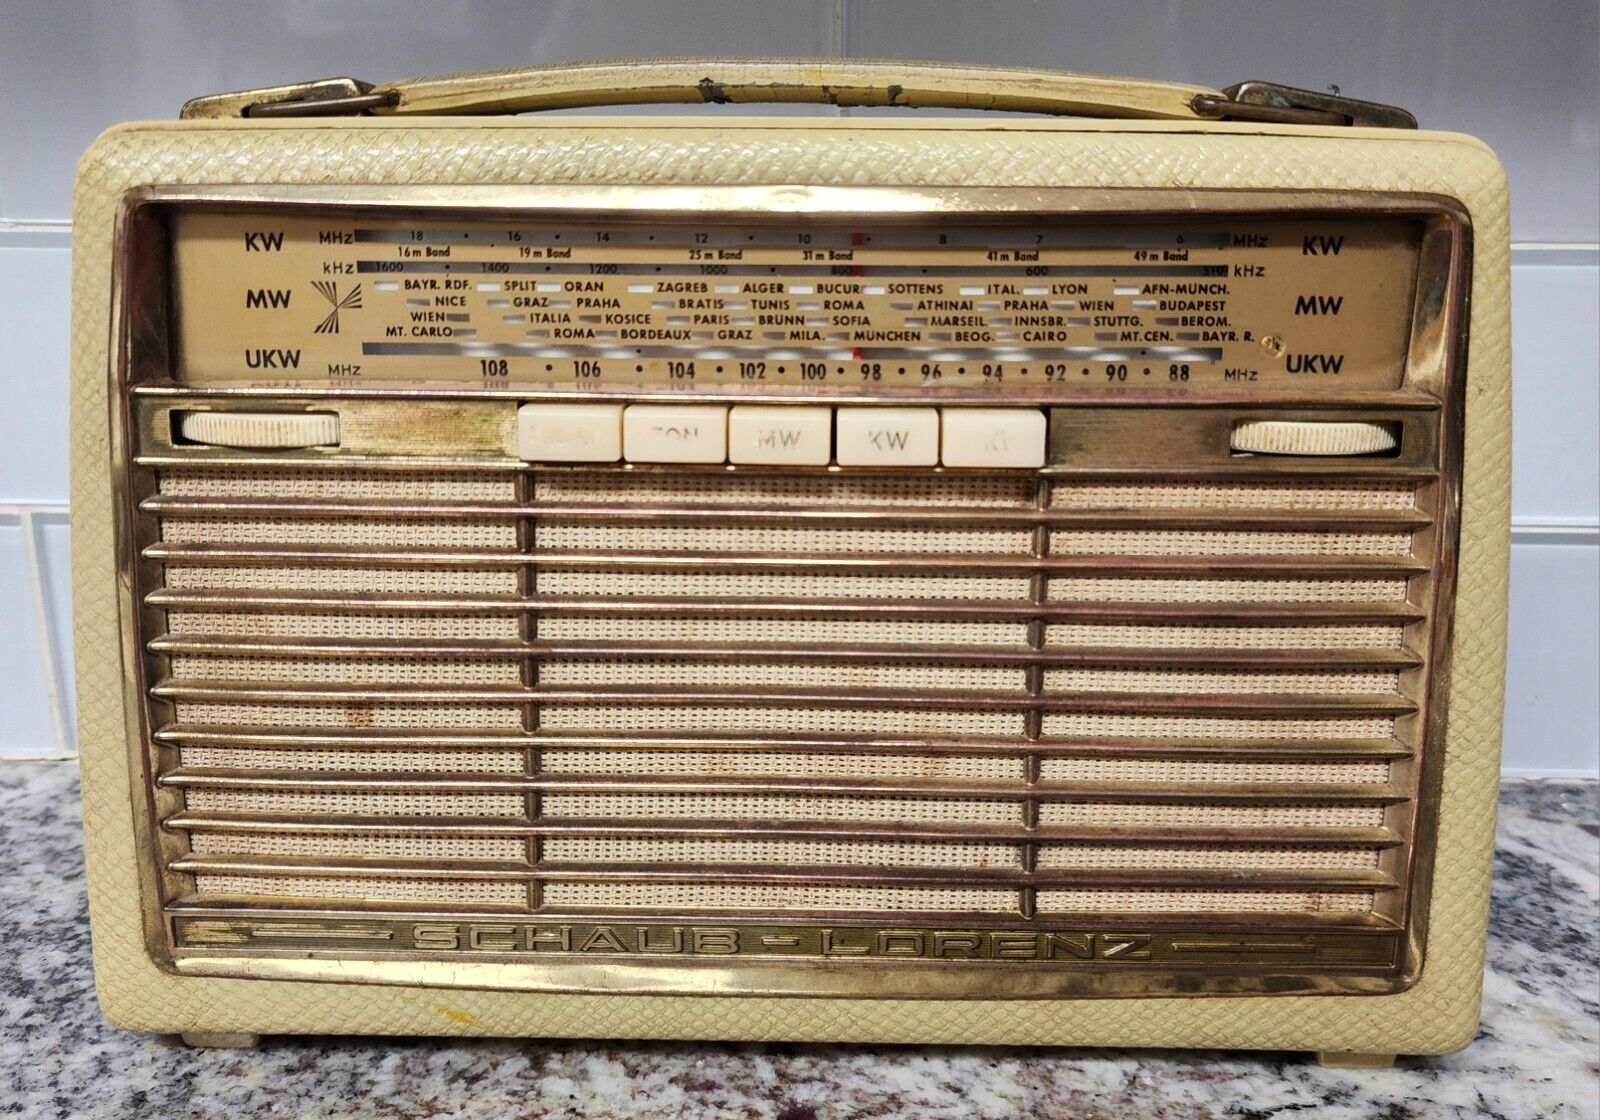 Vintage Shaub-Lorenz Radio • Amigo T20K, 1961 • Made in Germany